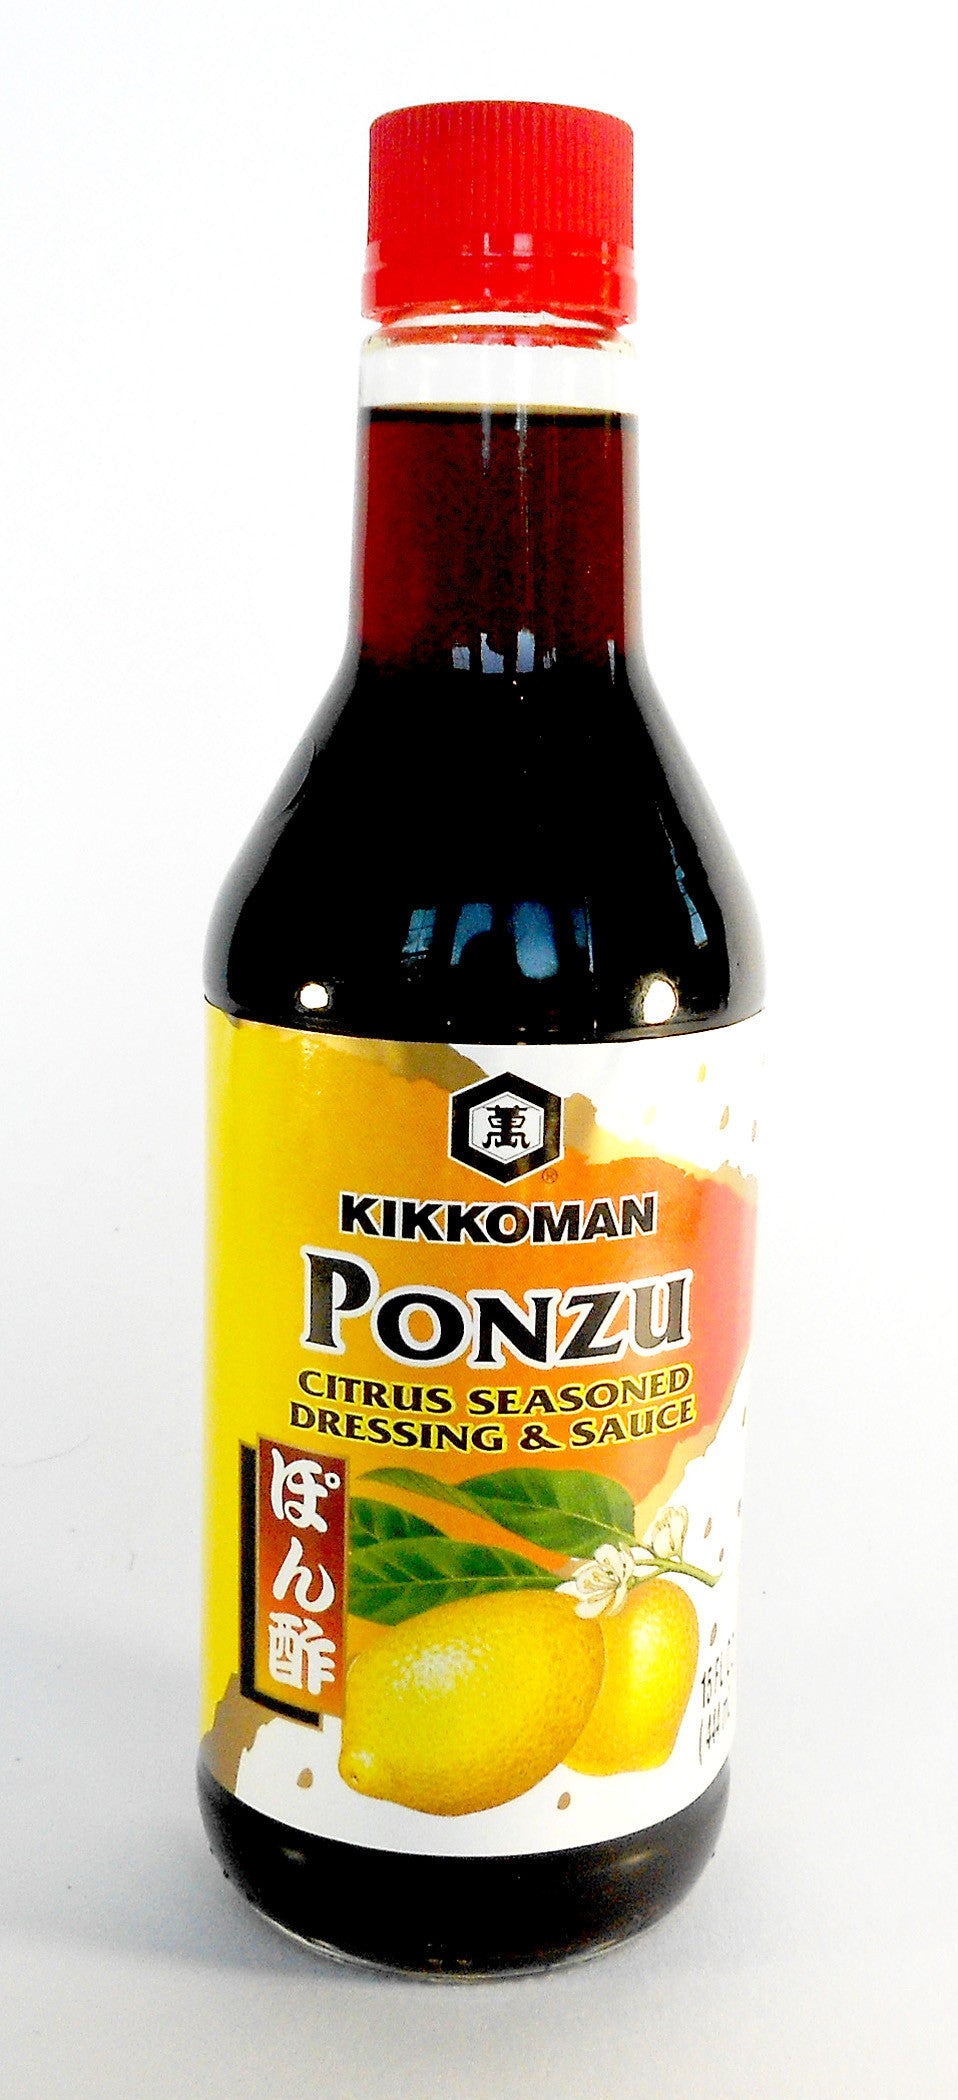 Kikkoman Ponzu Lemon Citrus Seasoned Dressing & Sauce 15 Fl Oz ...